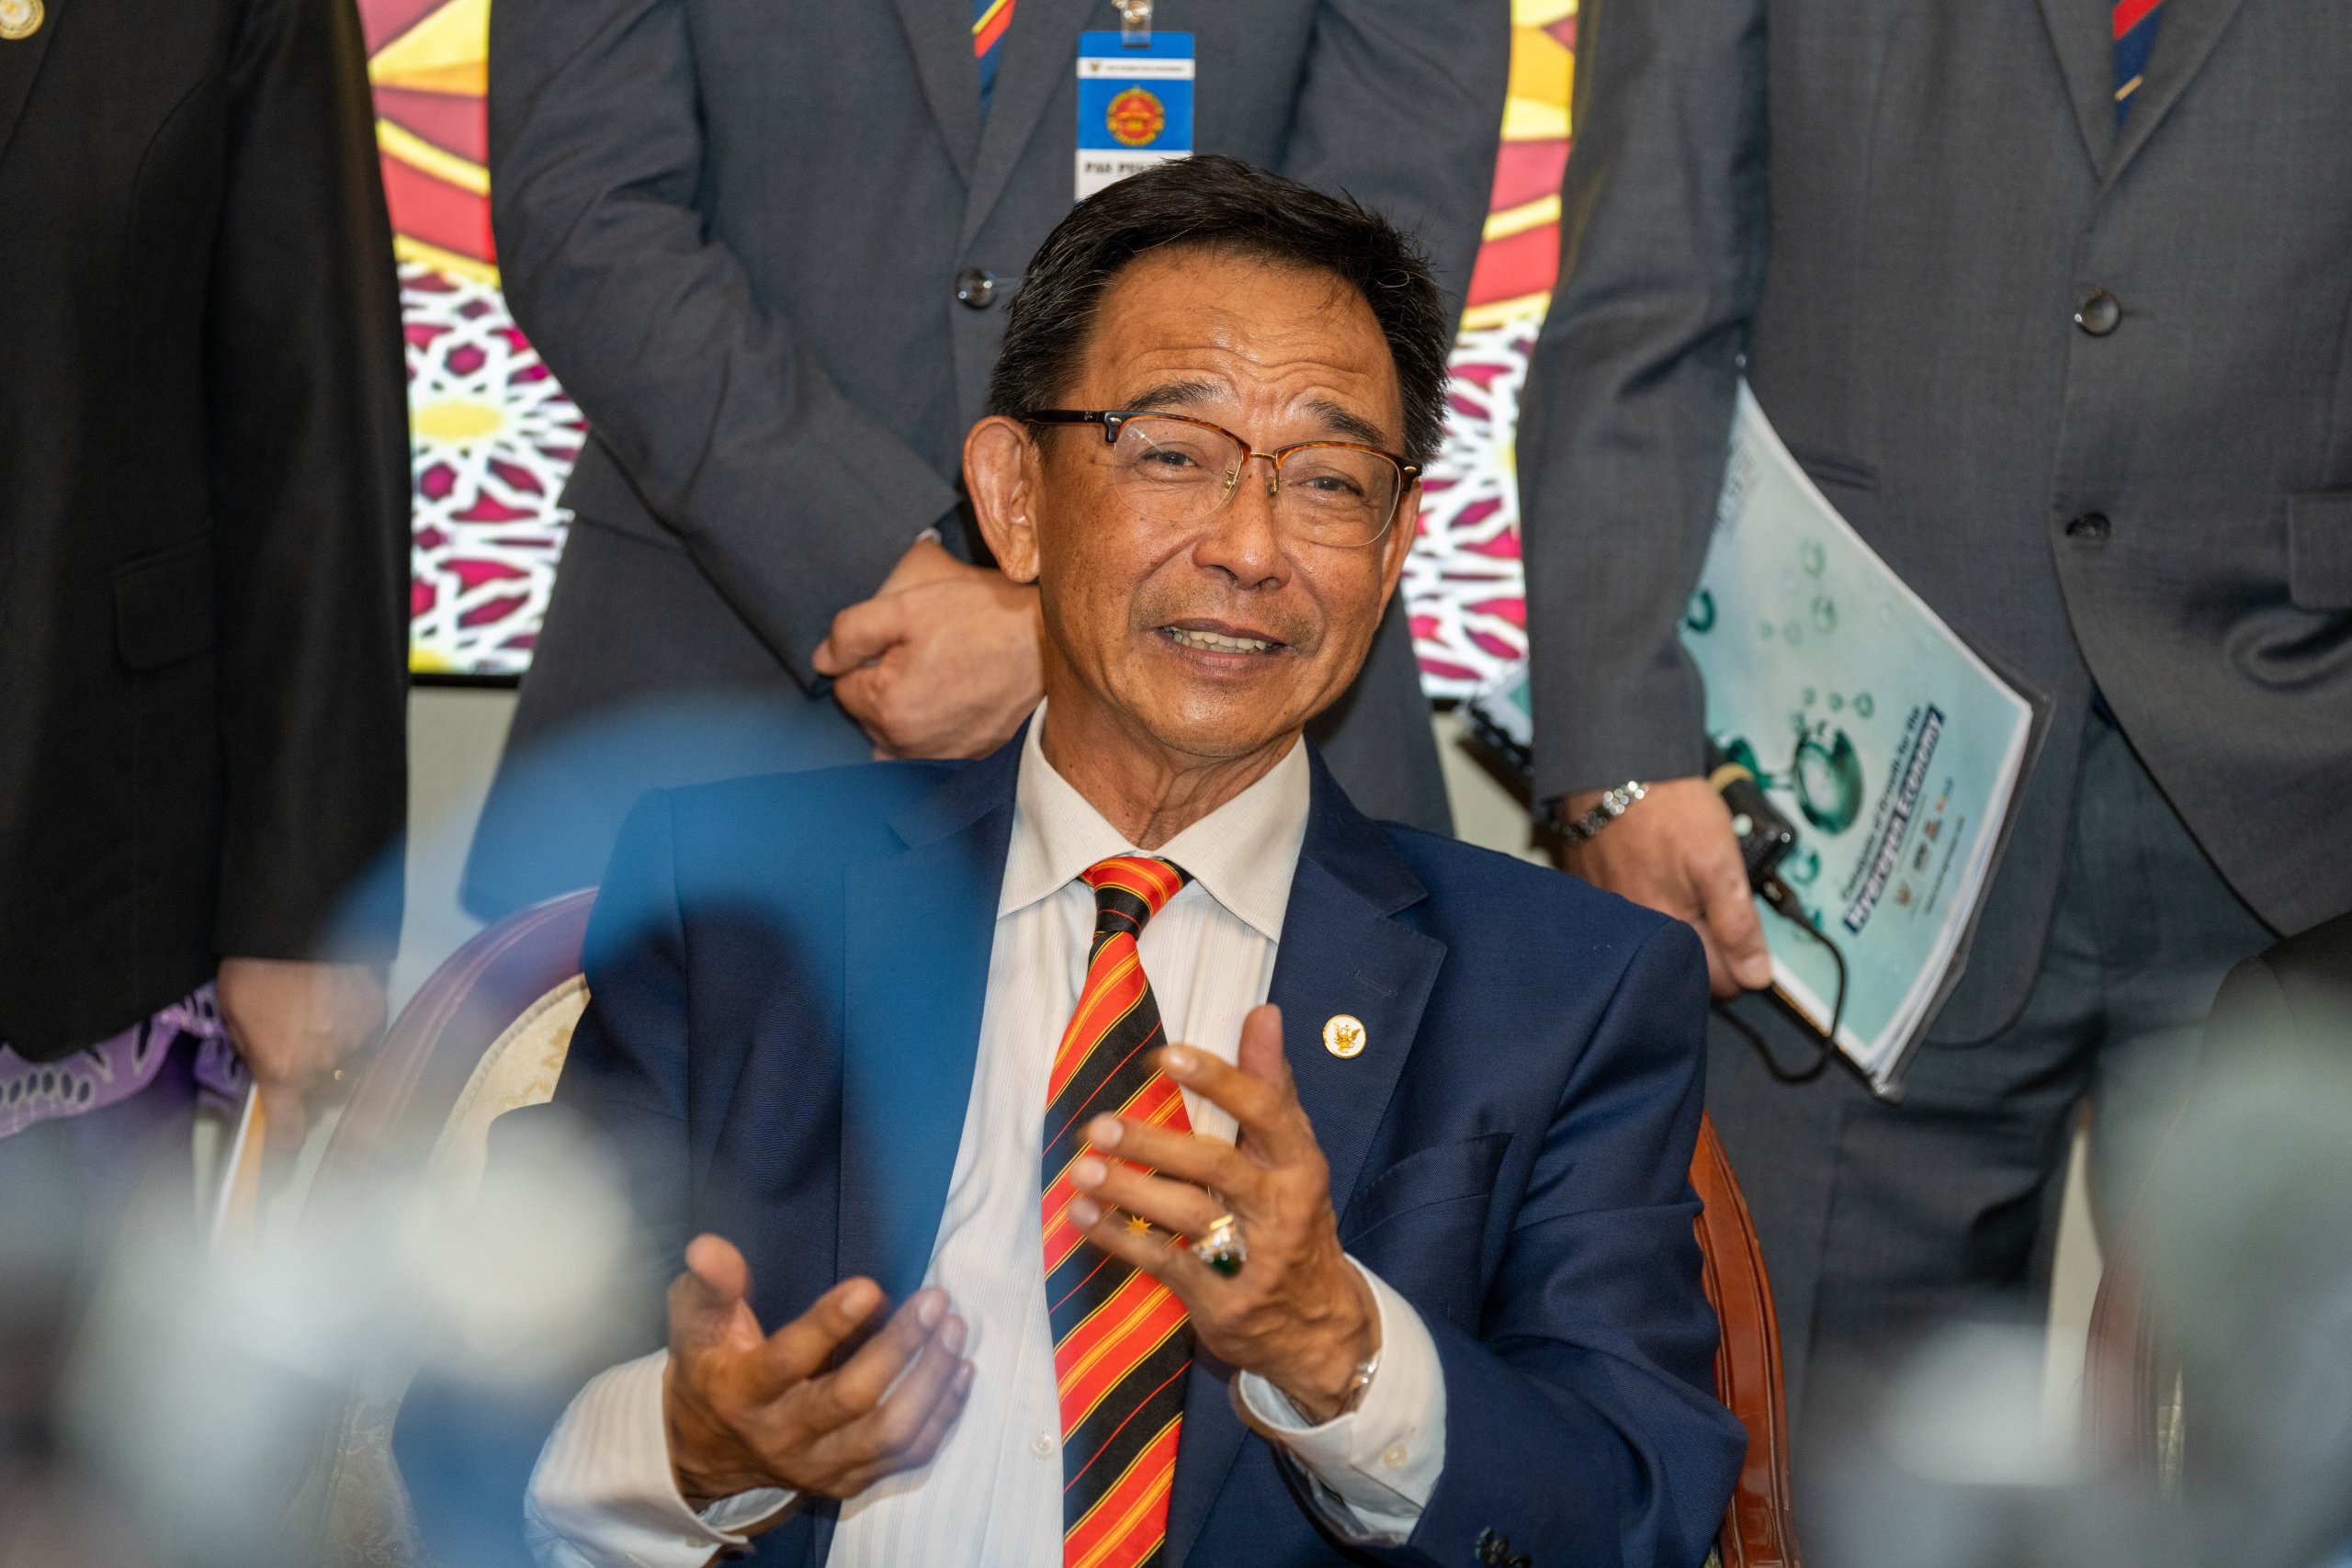 Abd Karim upbeat Sarawak will get to host some SEA Games events